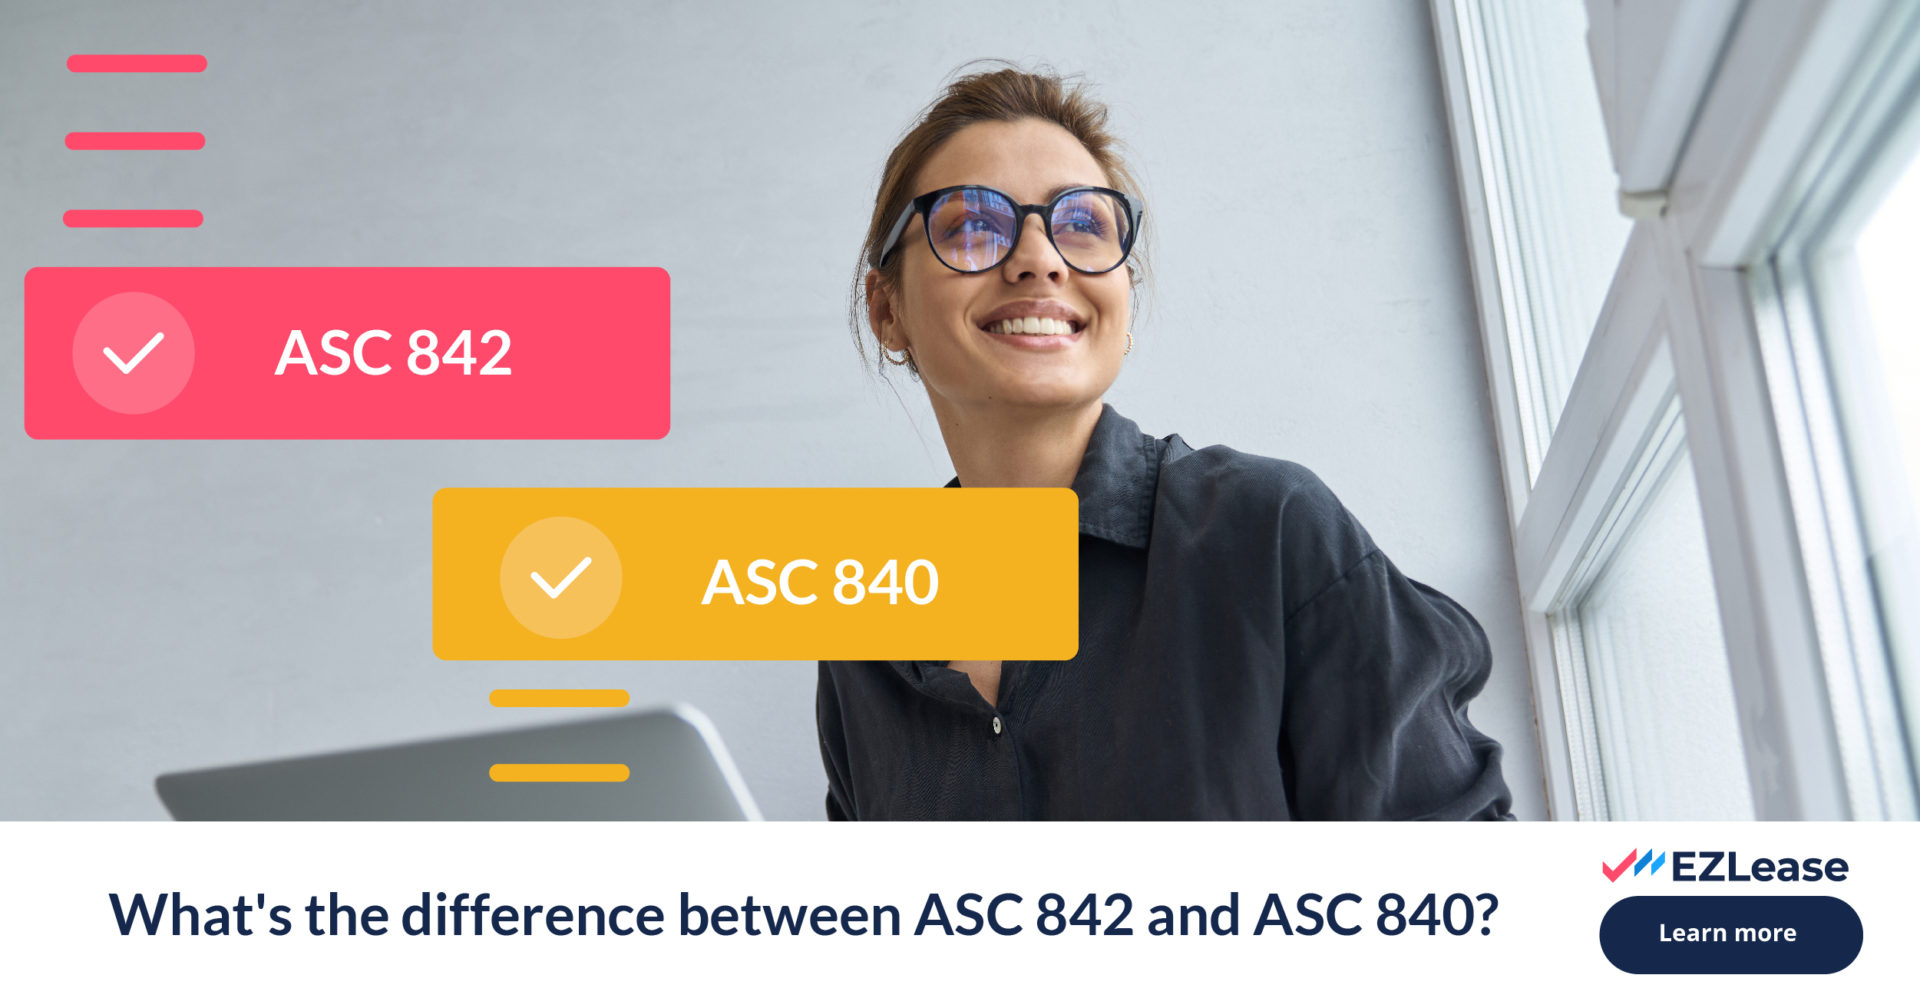 asc-840-vs-asc-842-ezlease